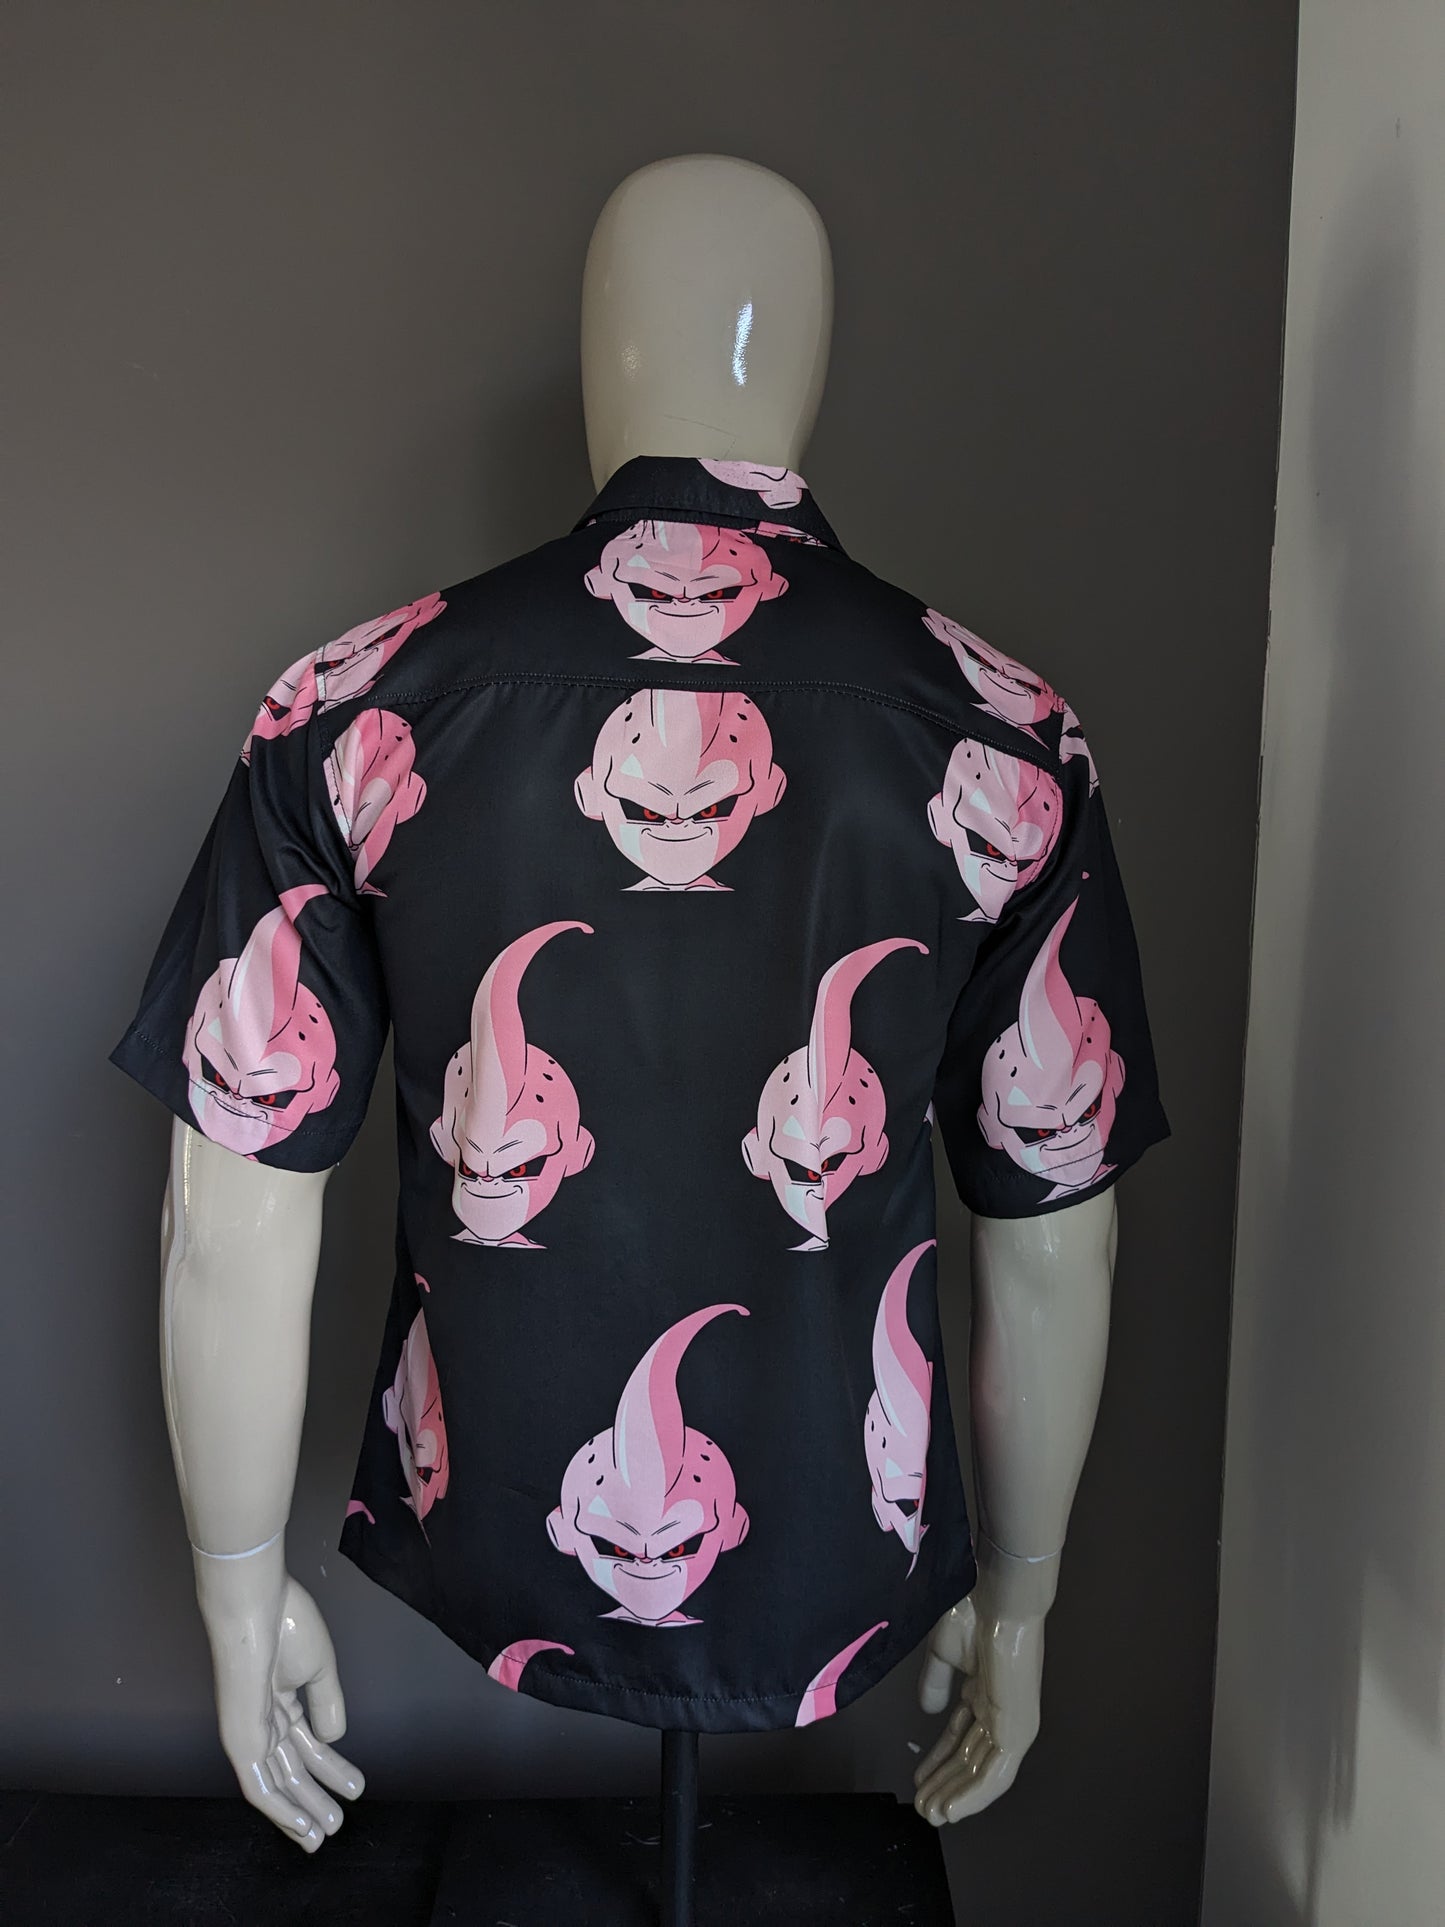 Dragon Ball Z Kid Buu Print Shirt. Impression rose noir. Taille M.